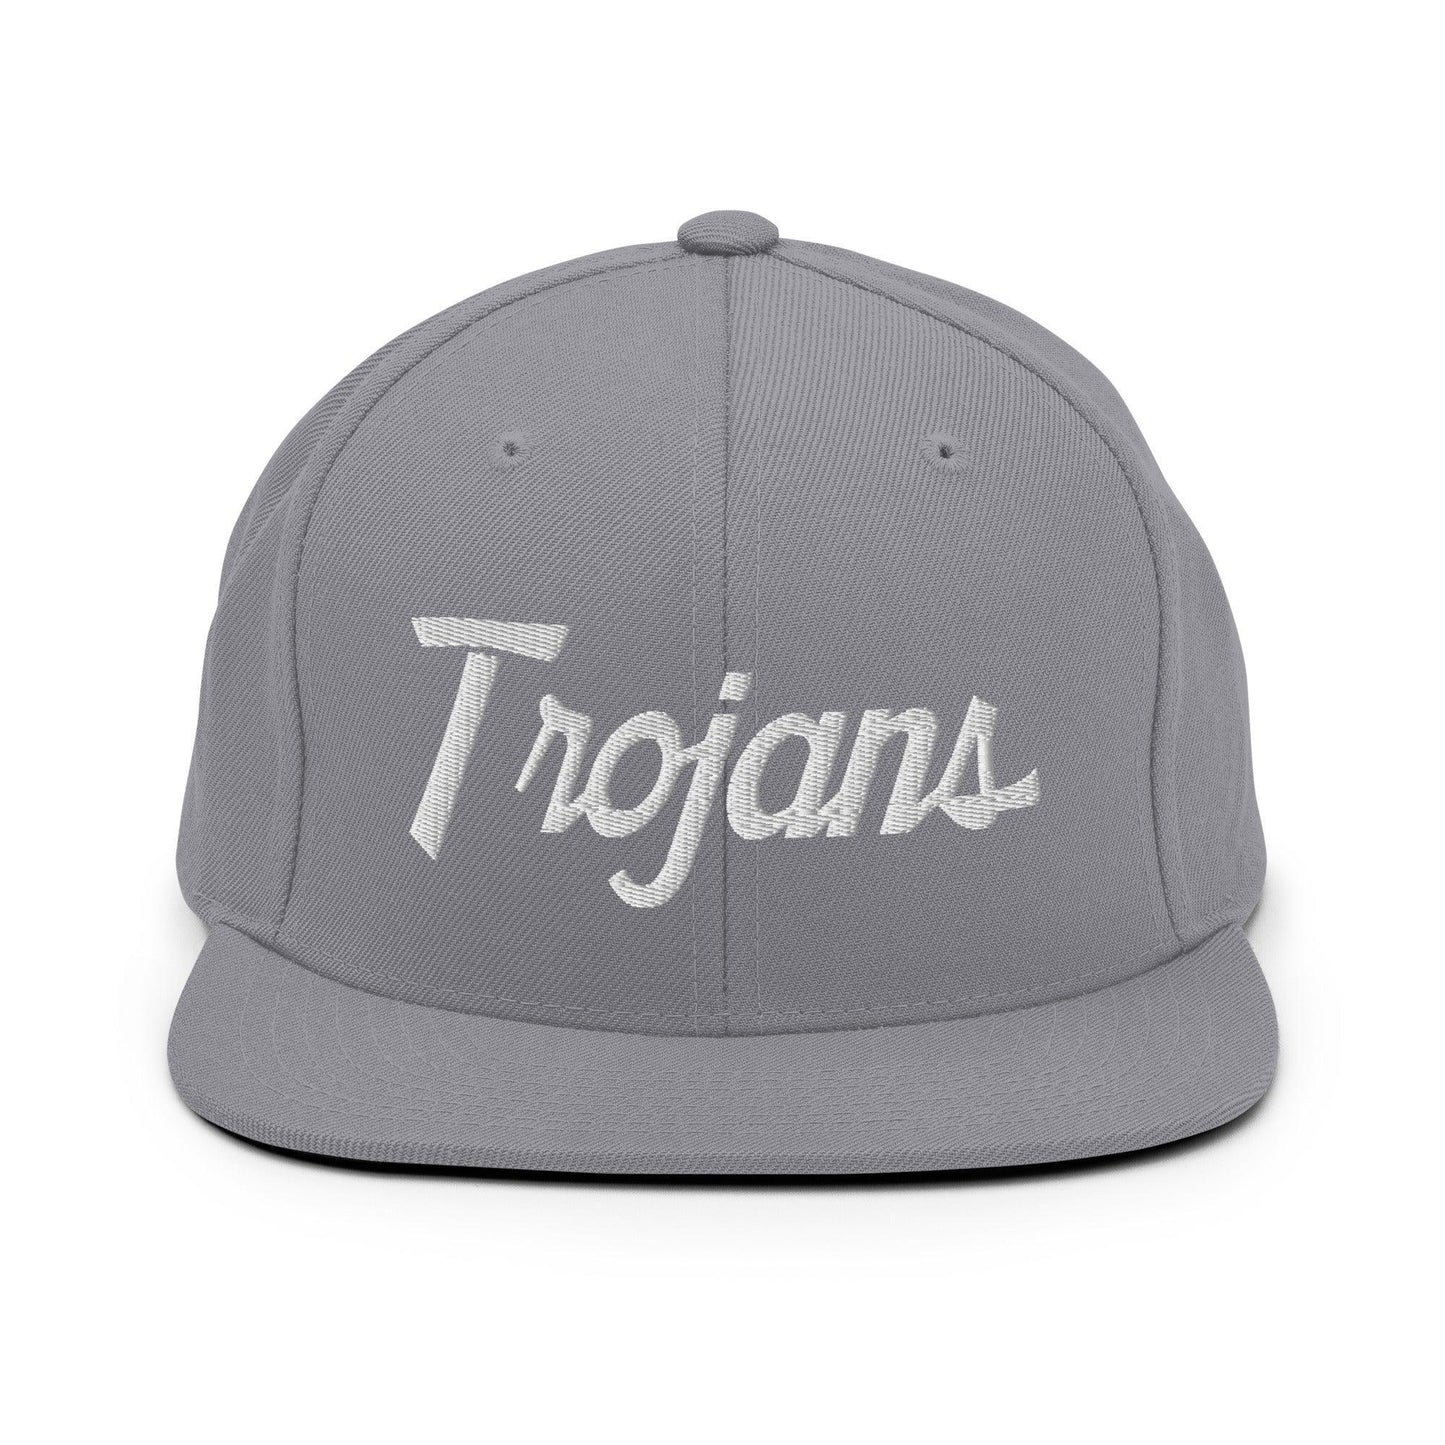 Trojans School Mascot Script Snapback Hat Silver